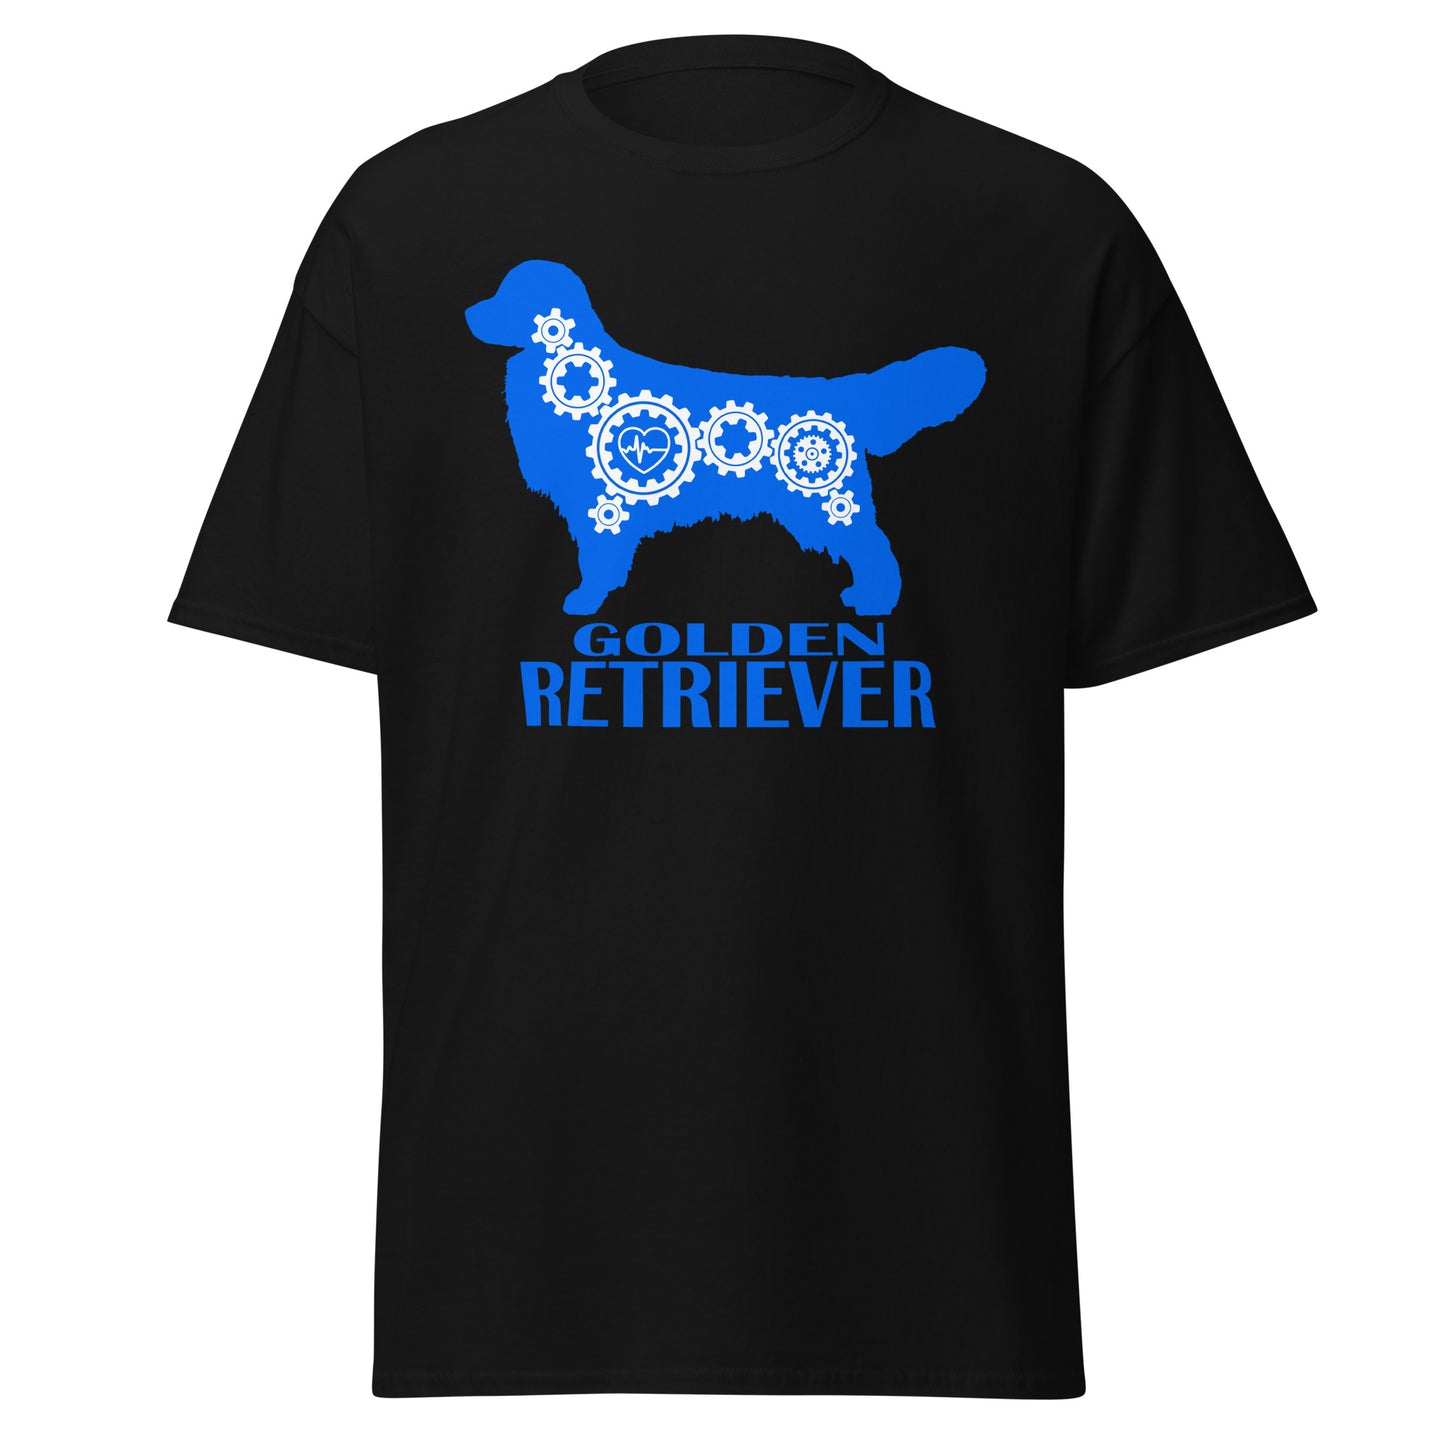 Golden Retriever Bionic men’s black t-shirt by Dog Artistry.